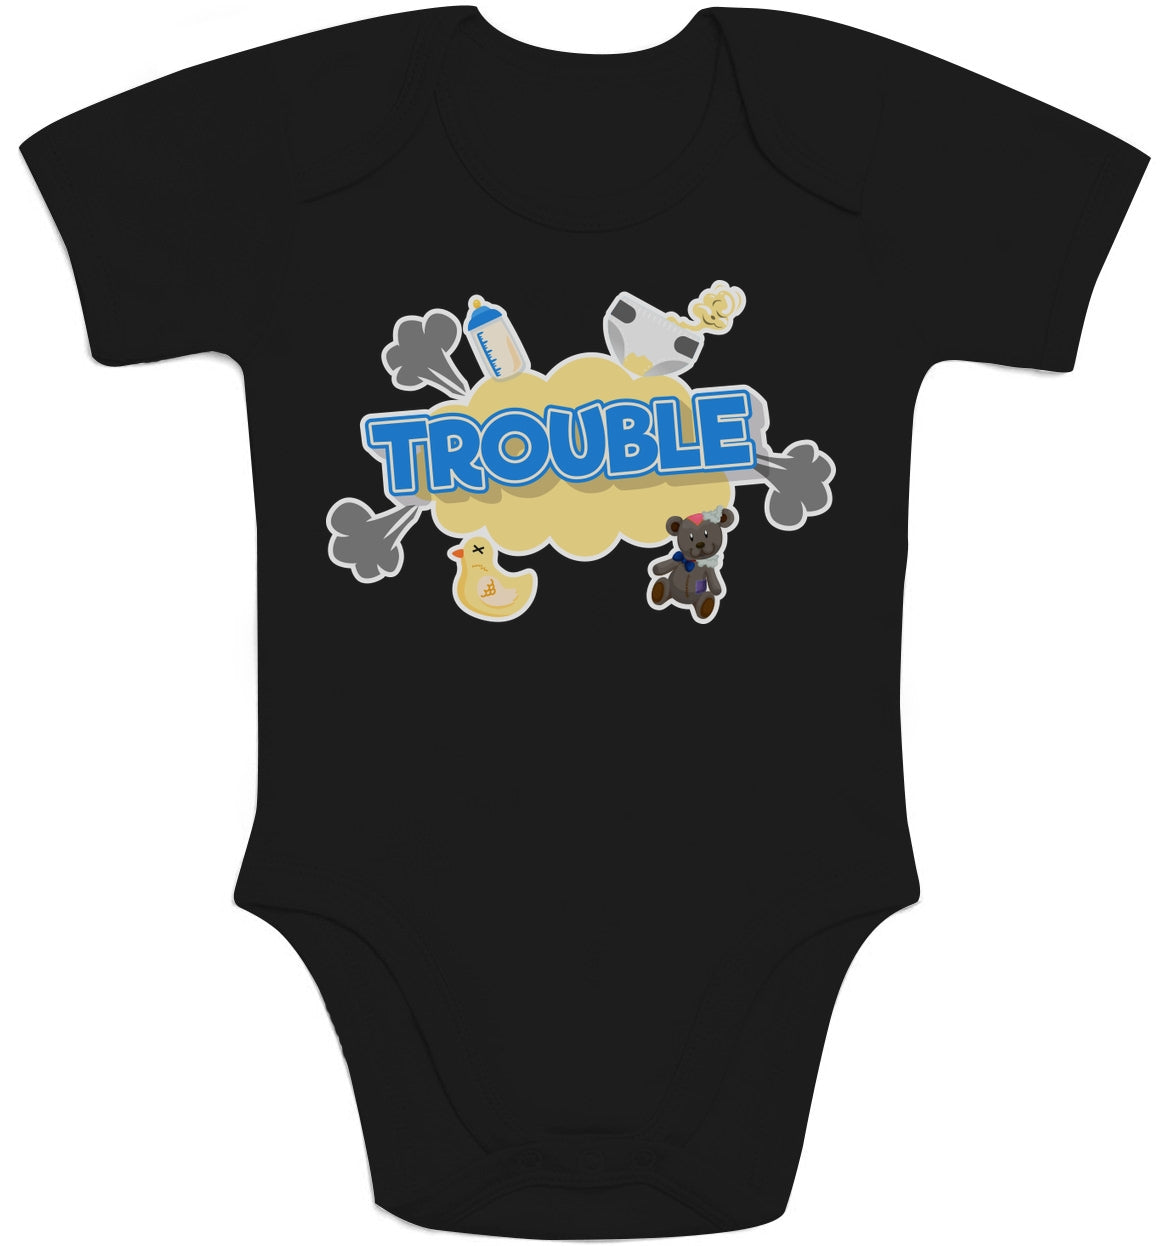 Trouble - Lustiger Spruch für Babies Baby Body Kurzarm-Body